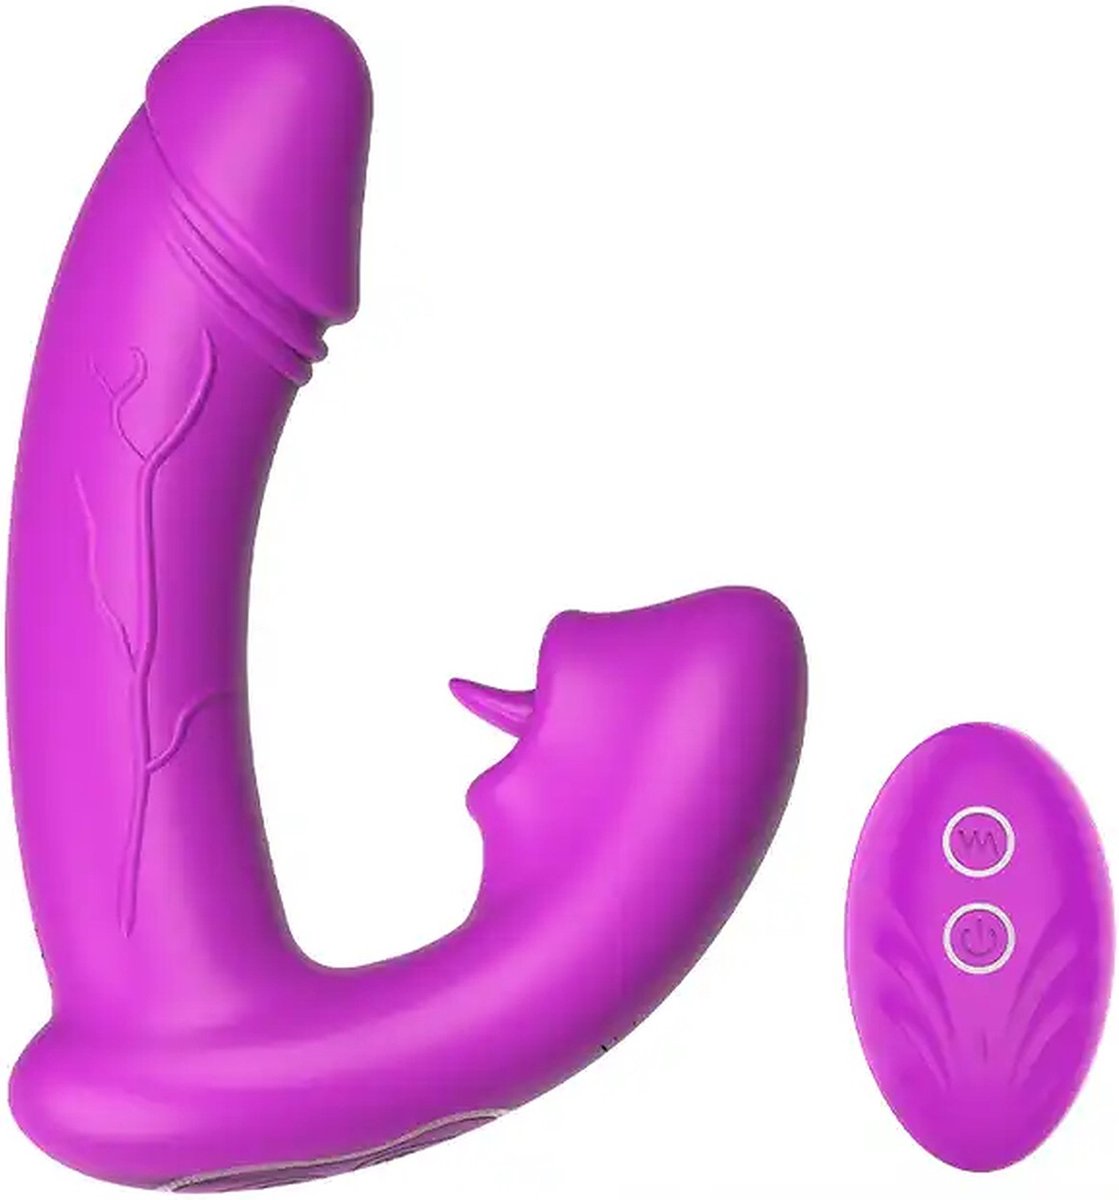 Tong Likkende Dildo Vibrator - Uzzy M.F N03 - Met afstandsbediening - 2 in 1 -Paars - G-Spot - Clitoris Stimulator -Erotiek - Waterproof - Seksspeeltjes - Sex toys - Black - Voor haar - Voor Hem - Feestdagen - Cadeau